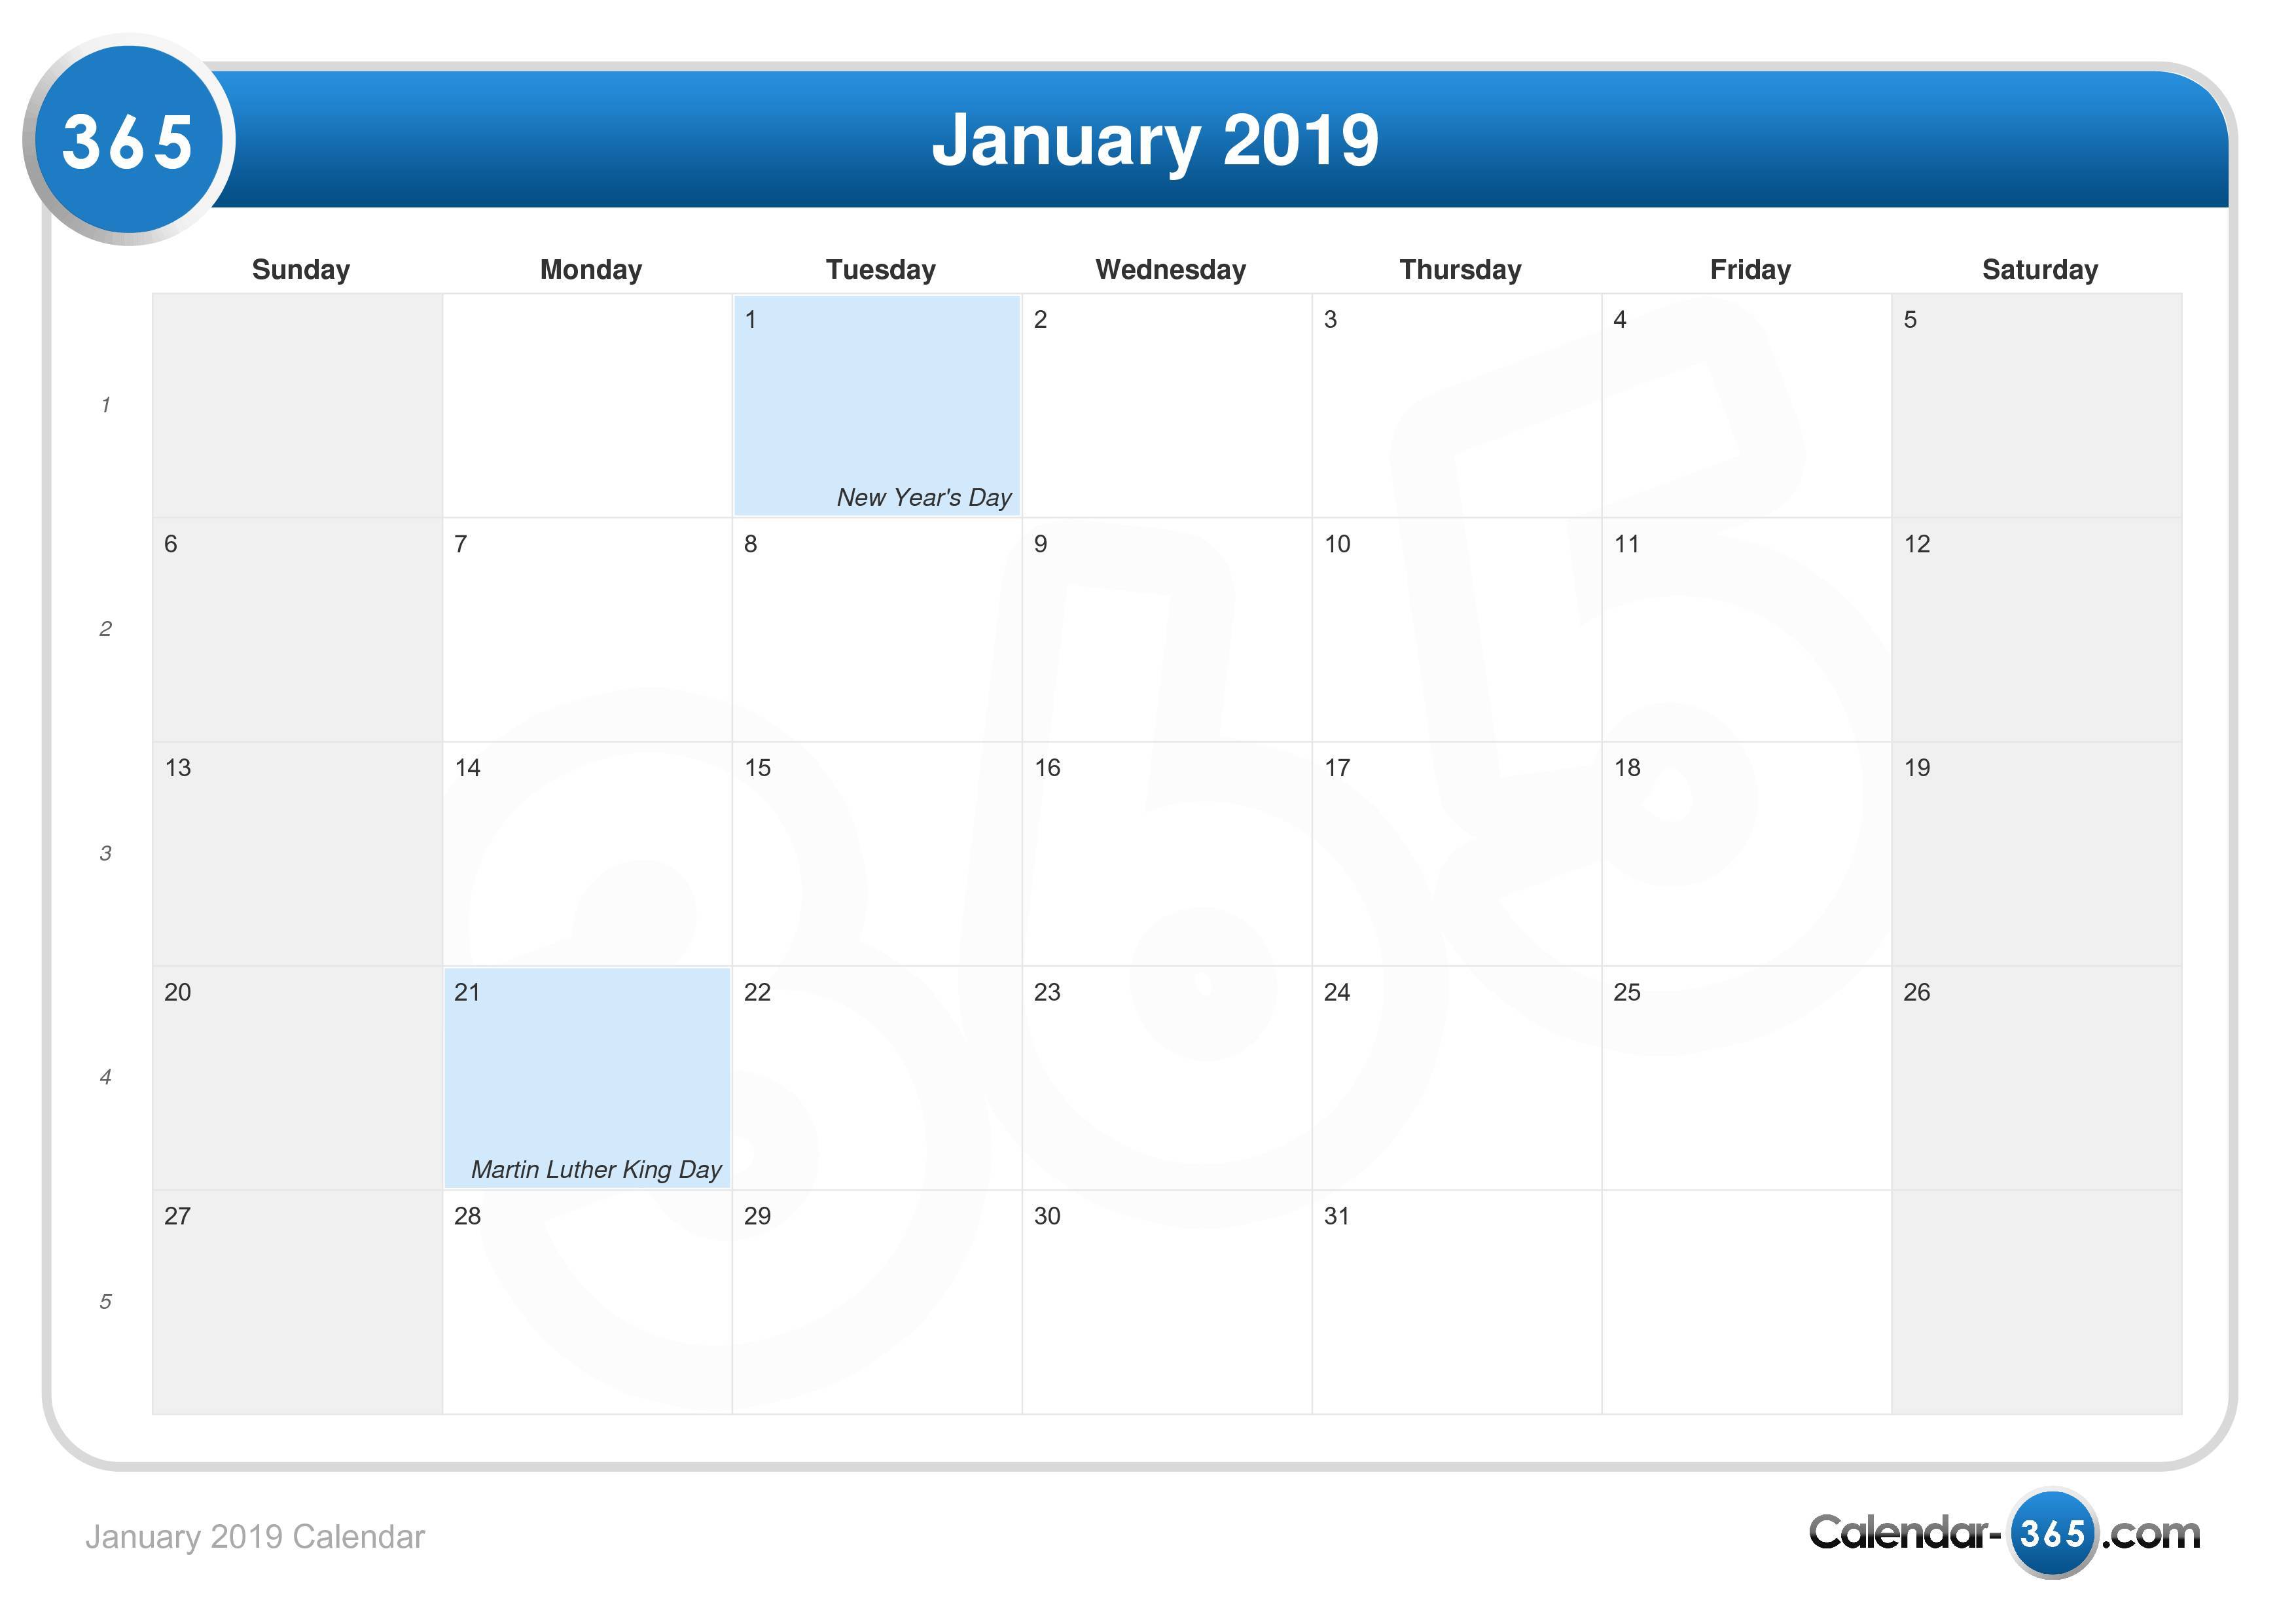 january-2019-calendar